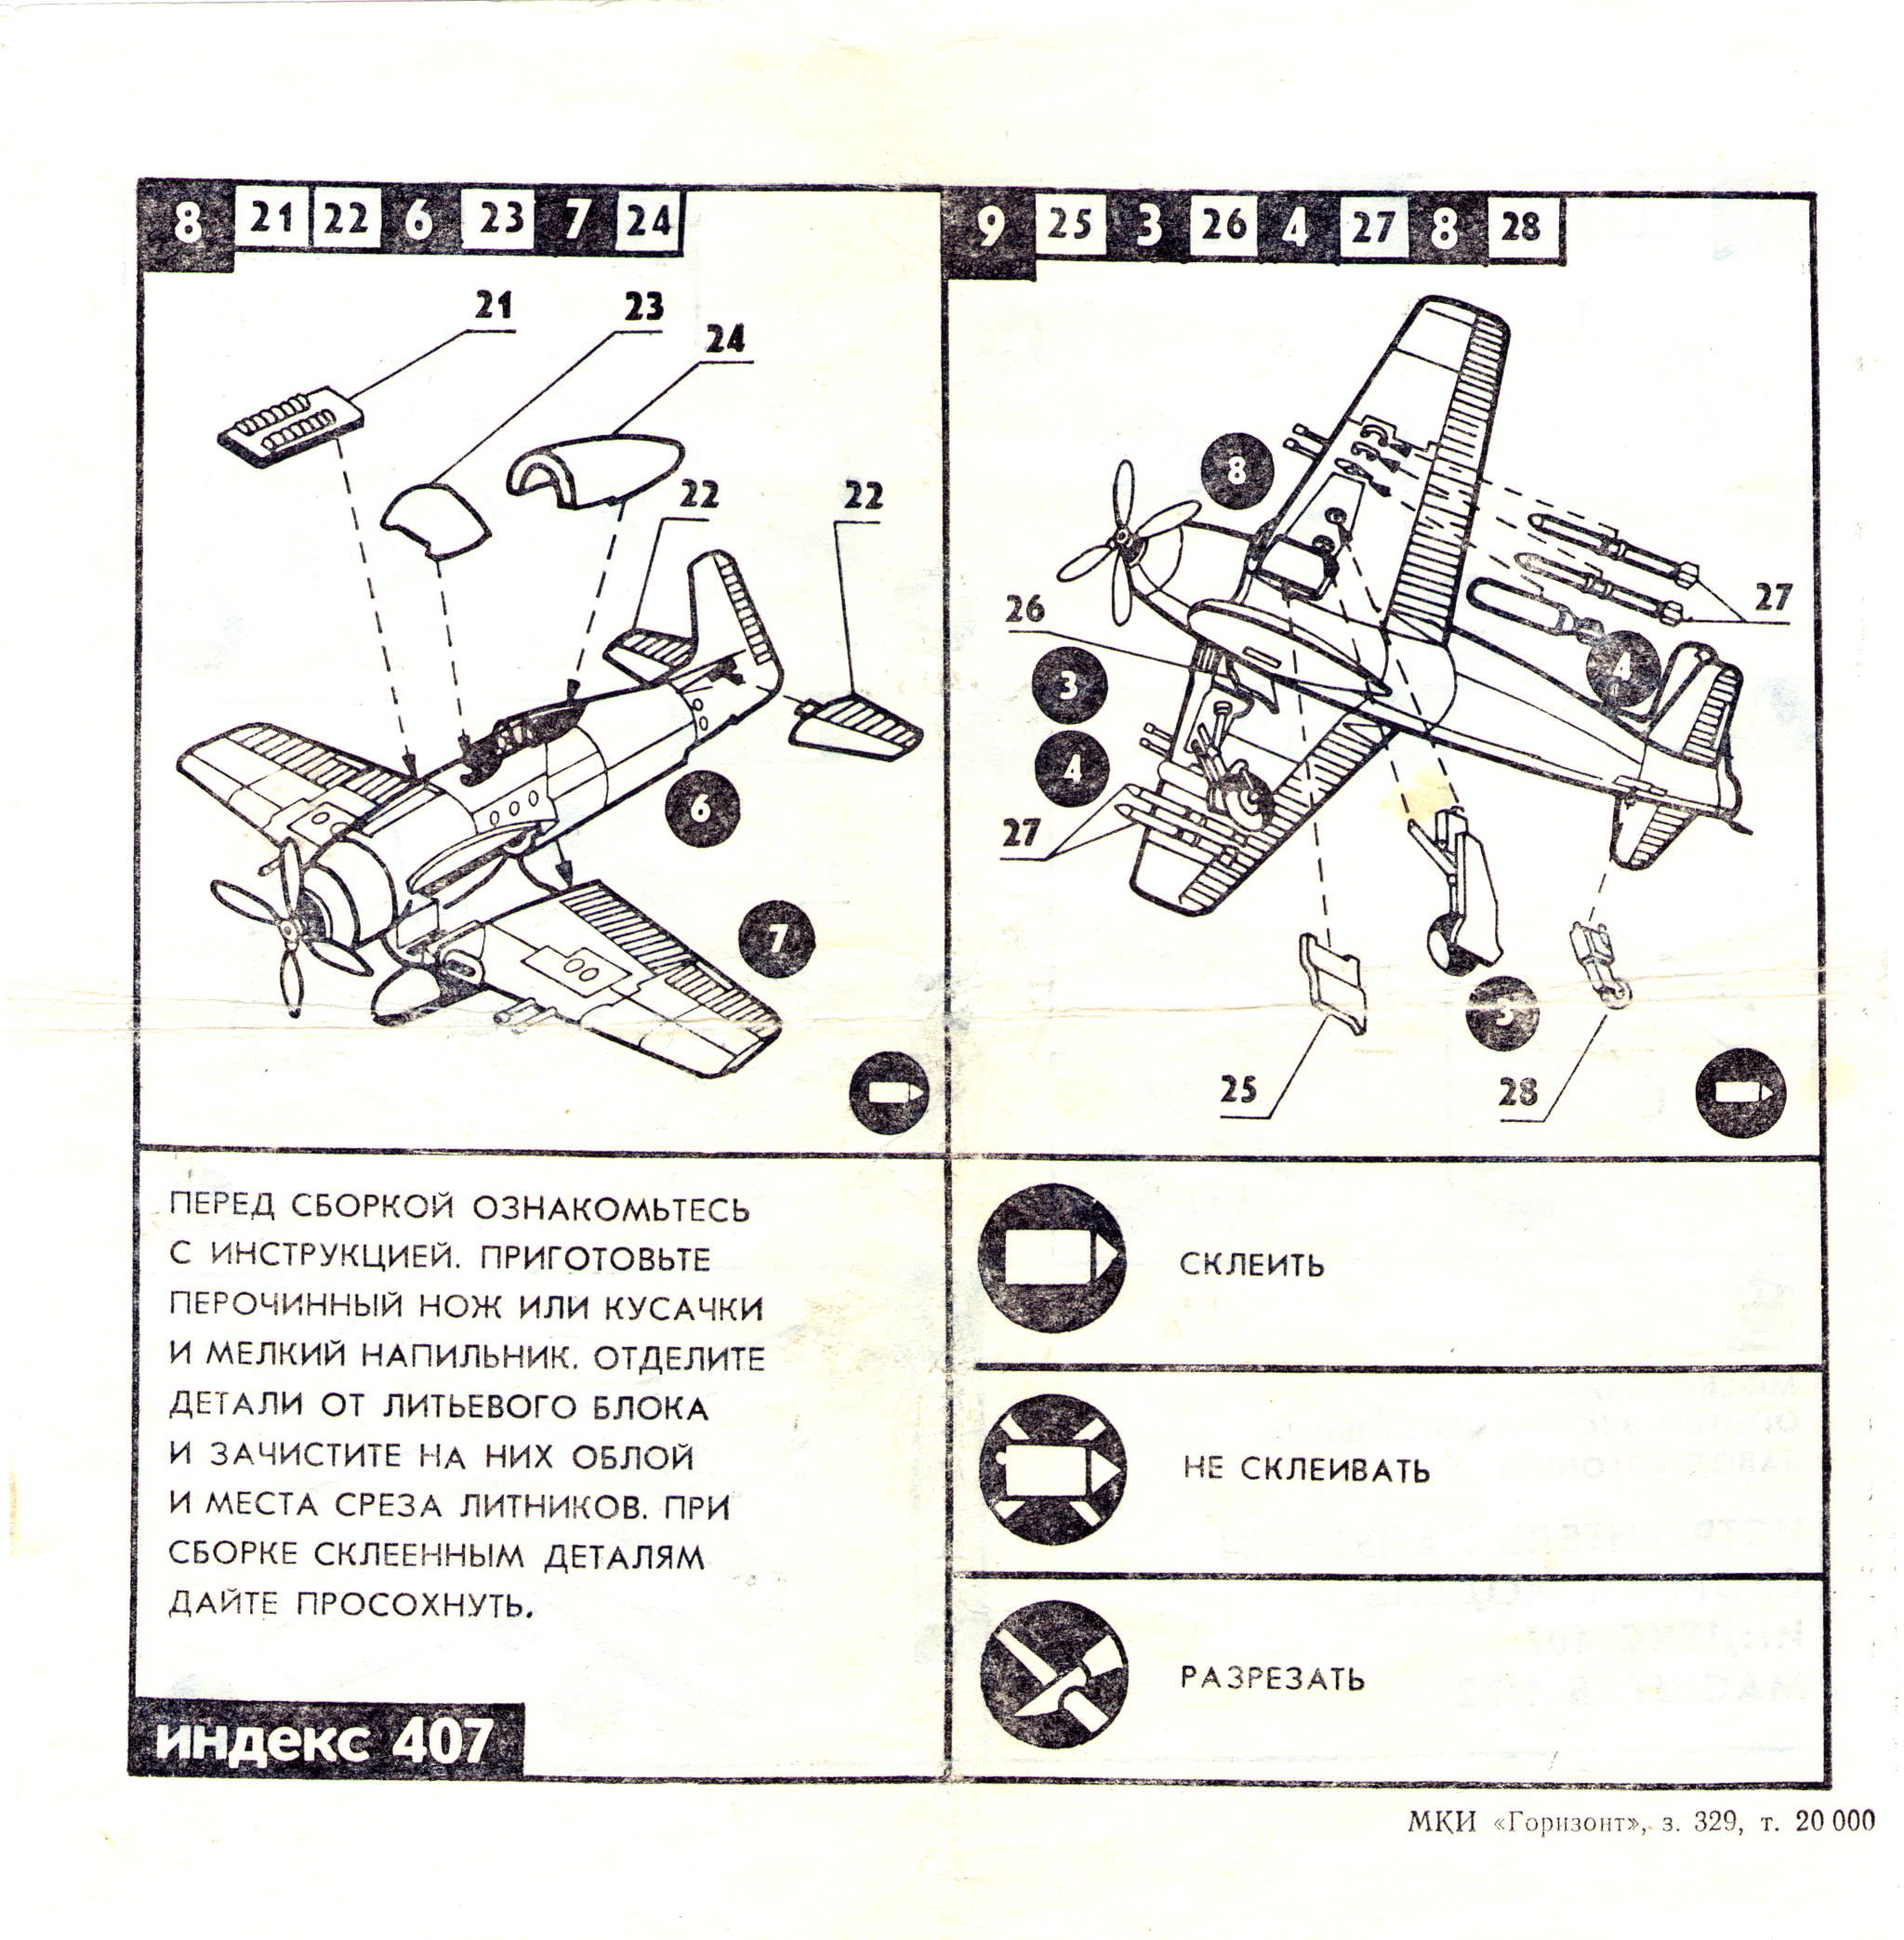 Index 407 Deck fighter, Moscow Test Experimental Plant Ogoniek, 1986-1989, инструкция по сборке, обратная сторона